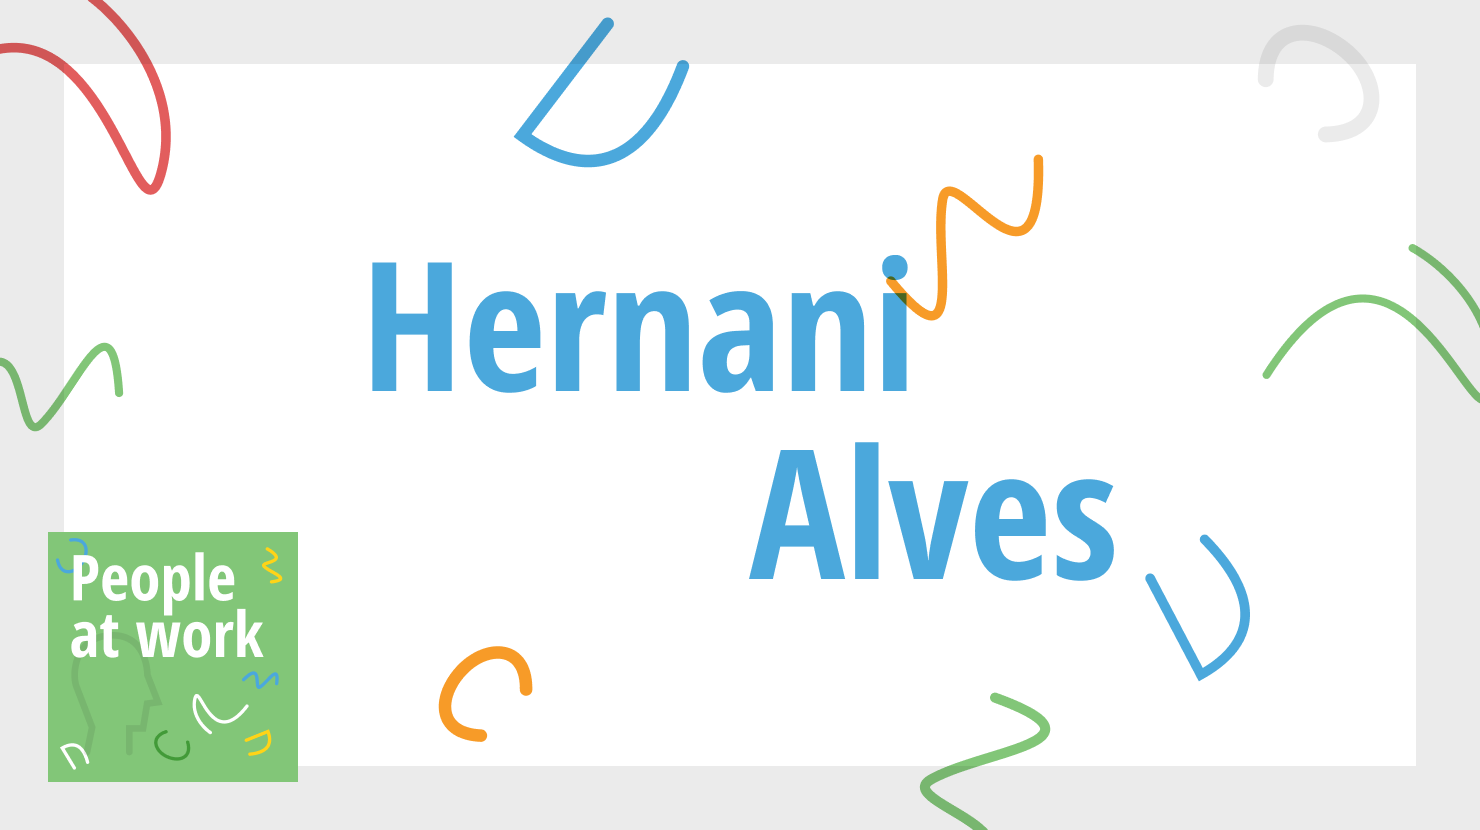 A champion mindset gives you control says Hernani Alves